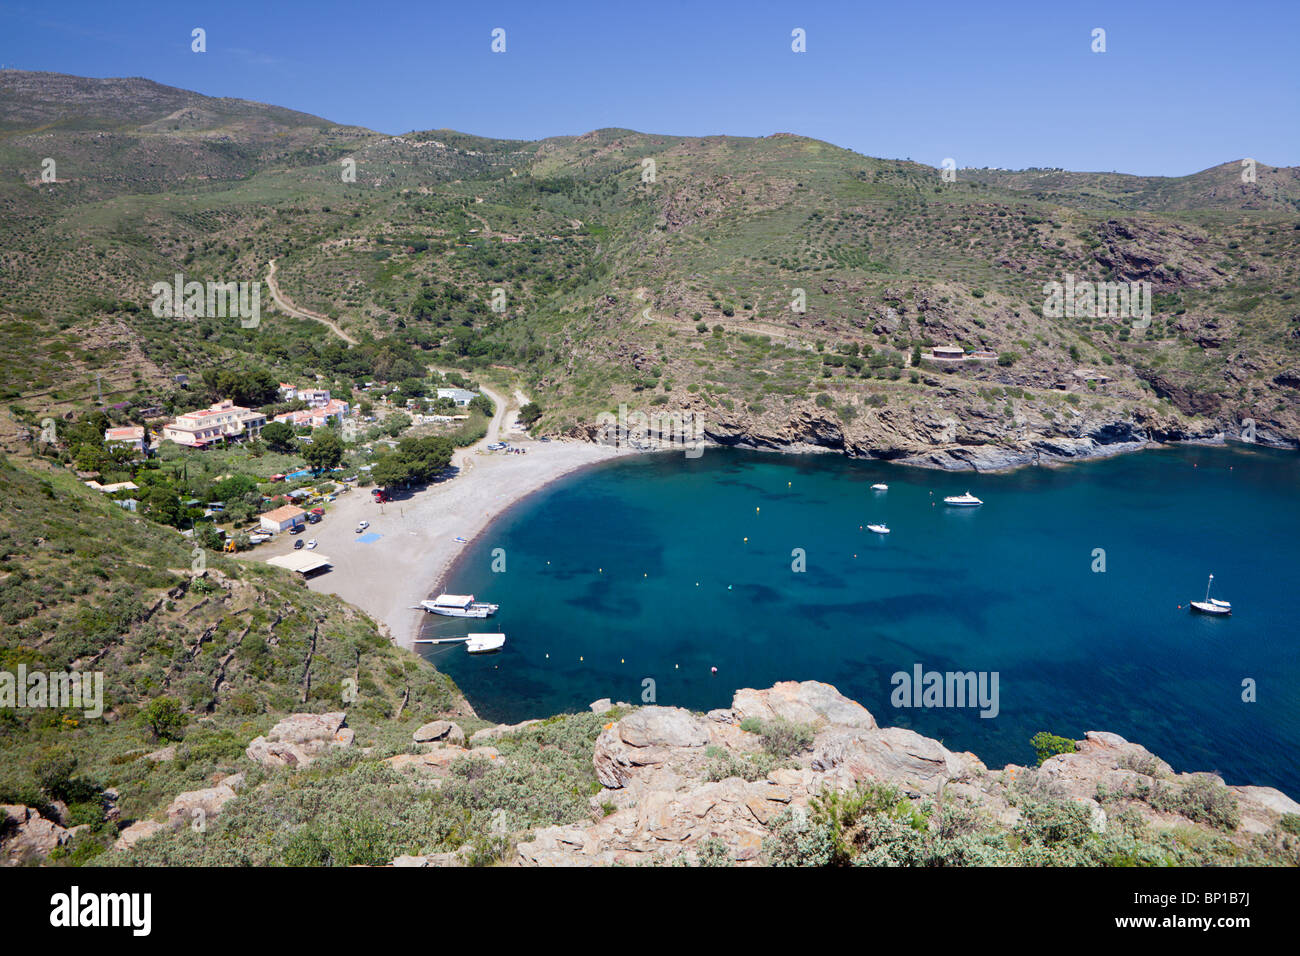 Bay of Cala Joncols, Cap de Creus, Costa Brava, Spain Stock Photo